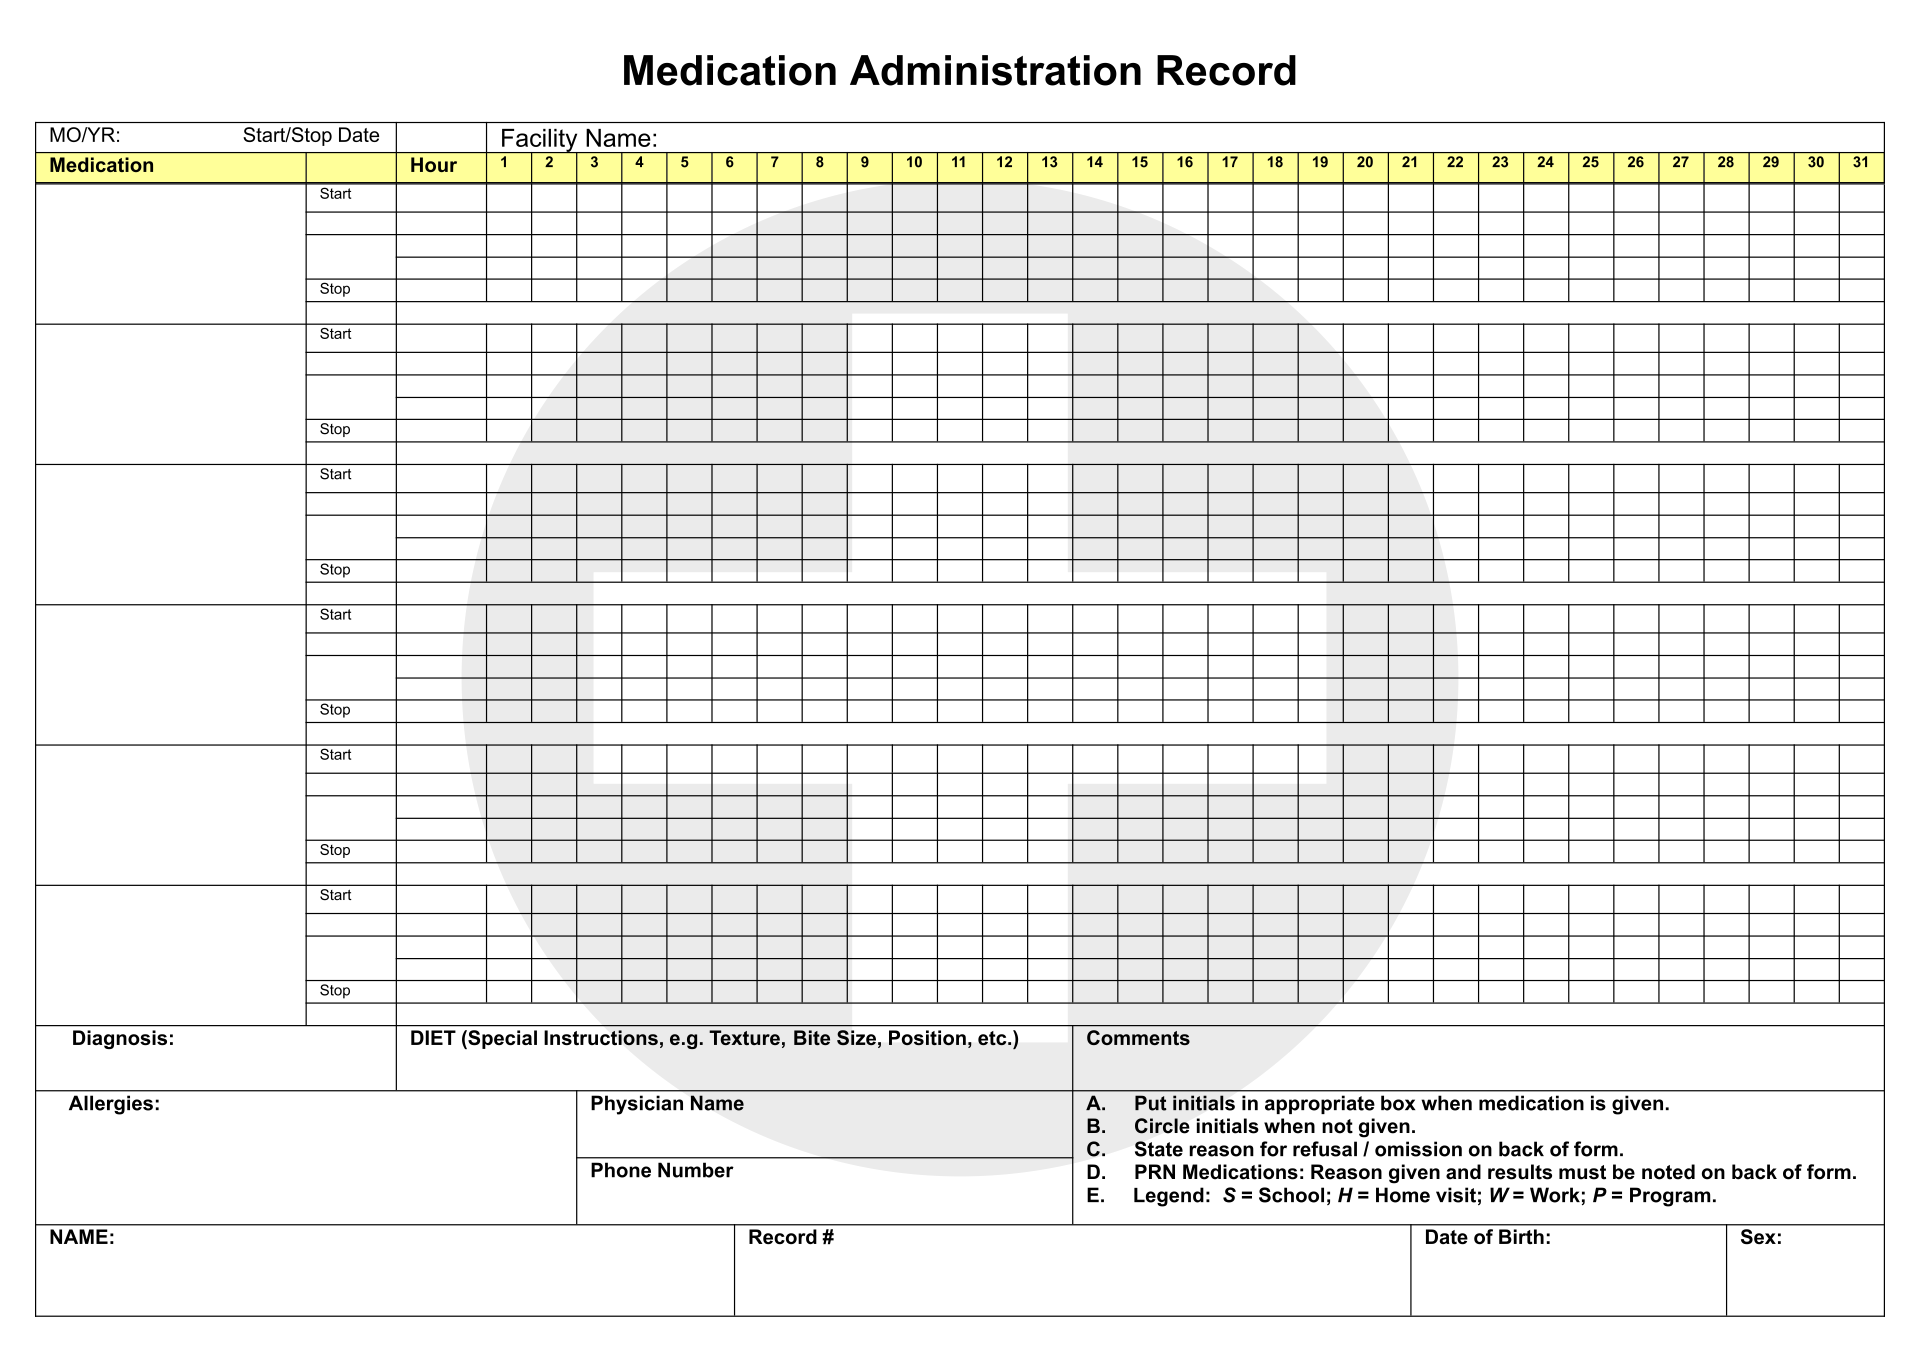 MAR CHART free-printable-medication-administration-record_135093.png